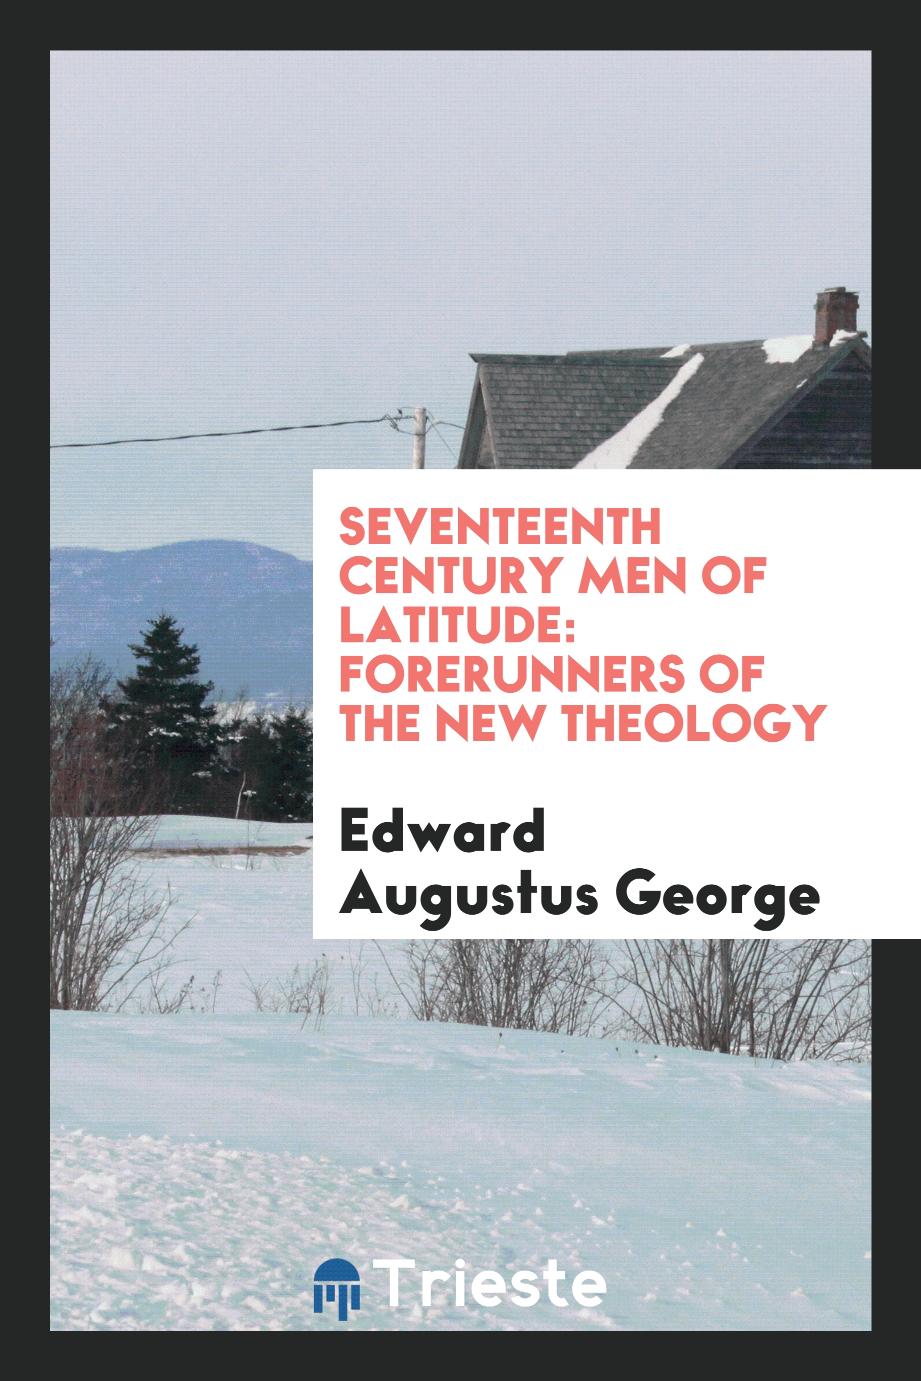 Seventeenth century men of latitude: forerunners of the new theology